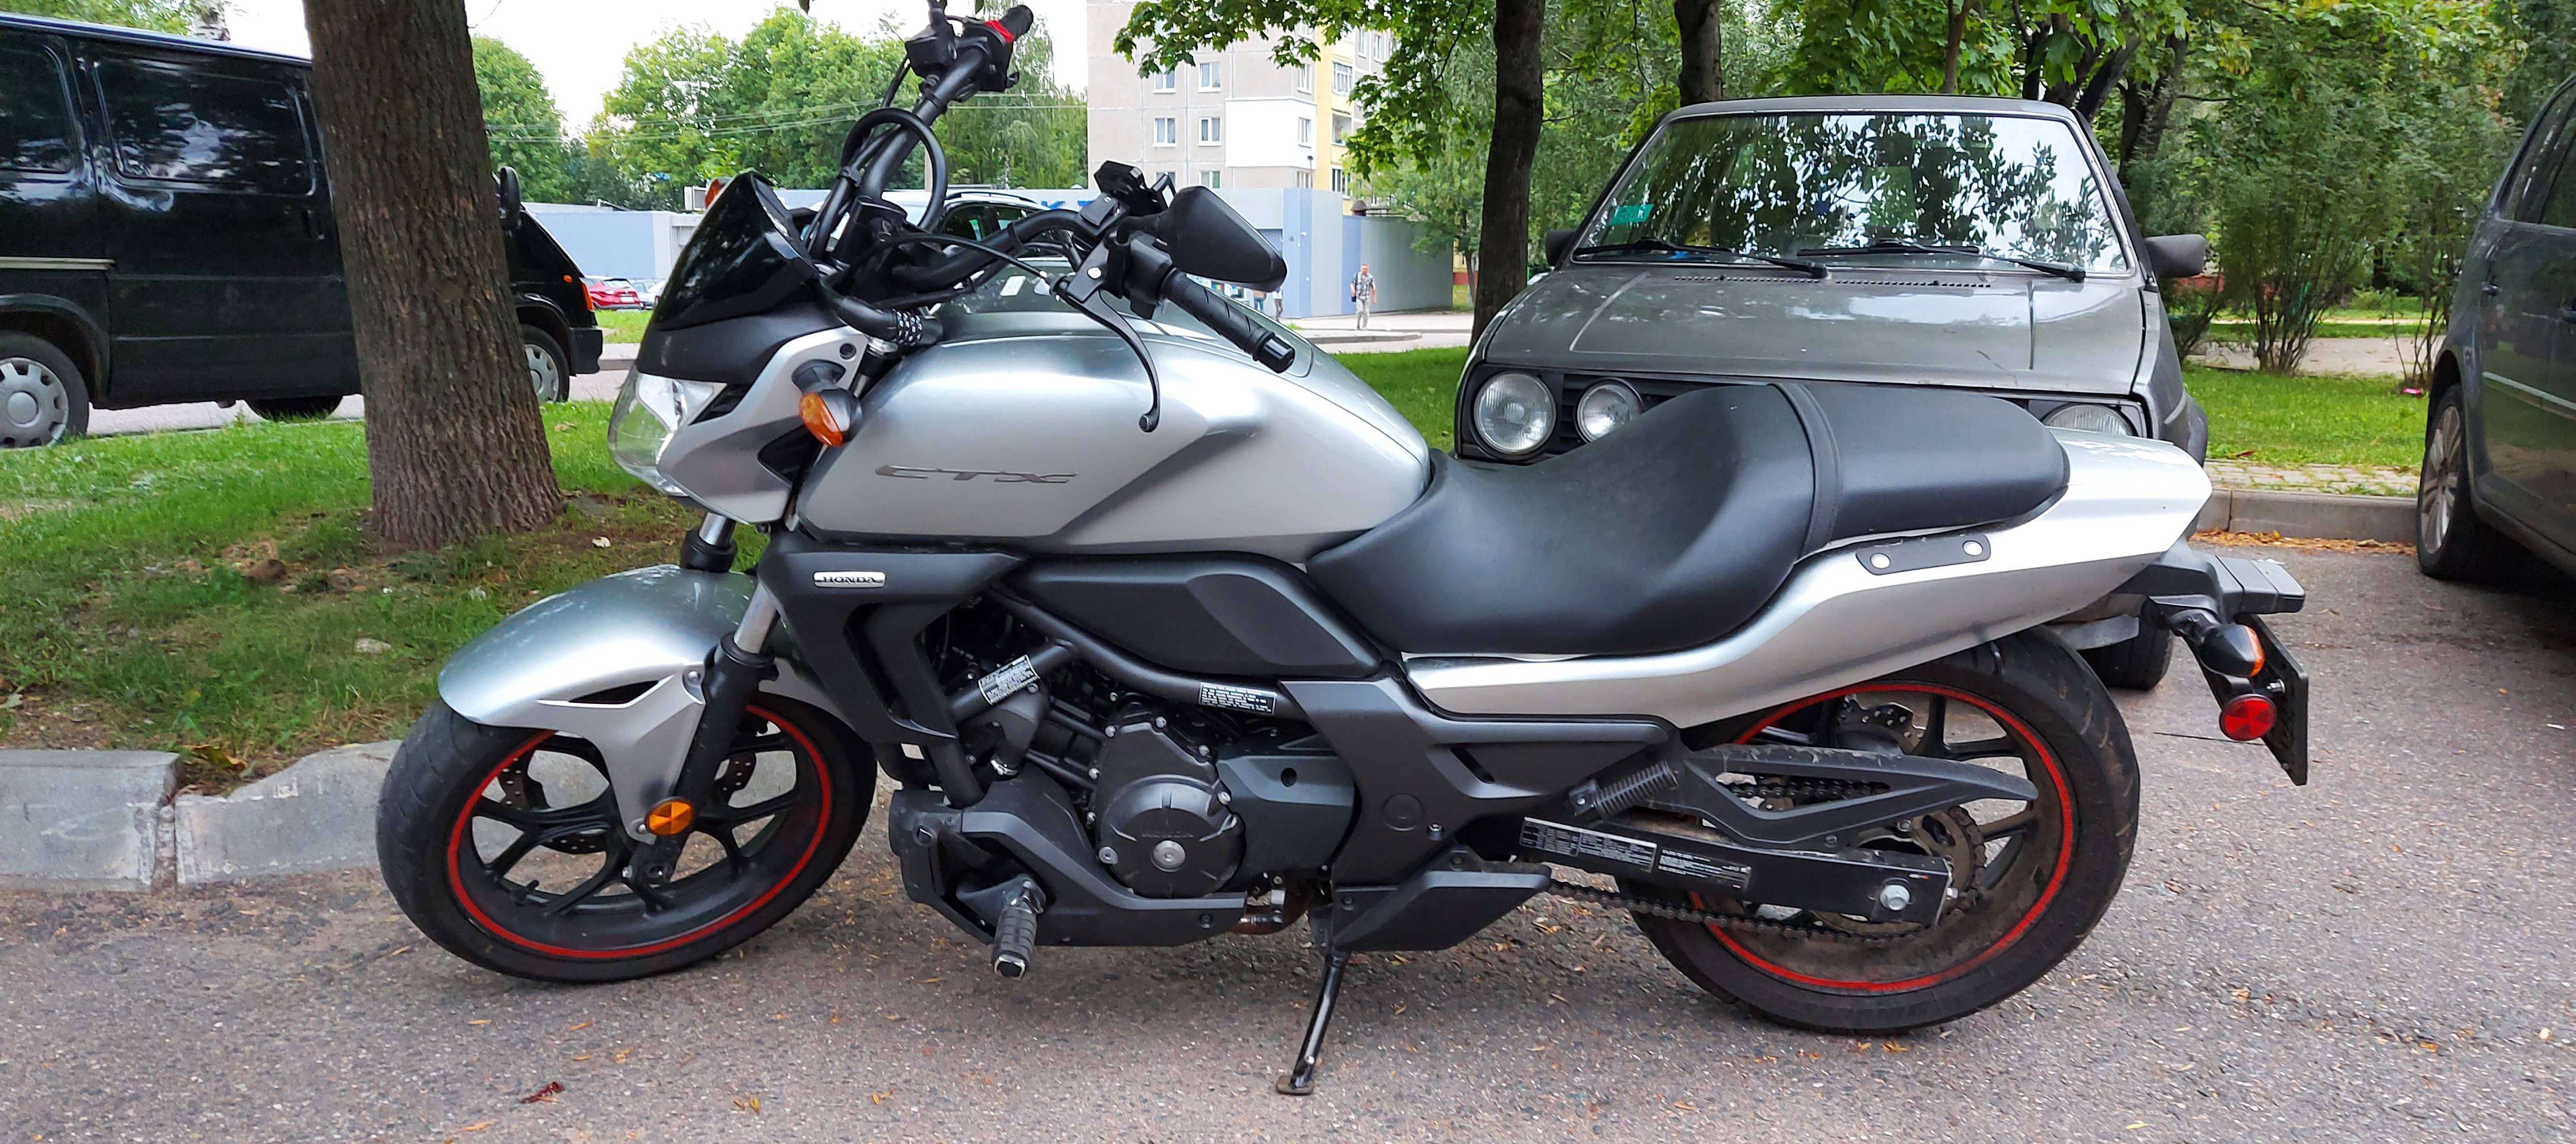 Купить мотоцикл Honda CTX в Беларуси в кредит - цены, характеристики, фото. в Беларуси в кредит